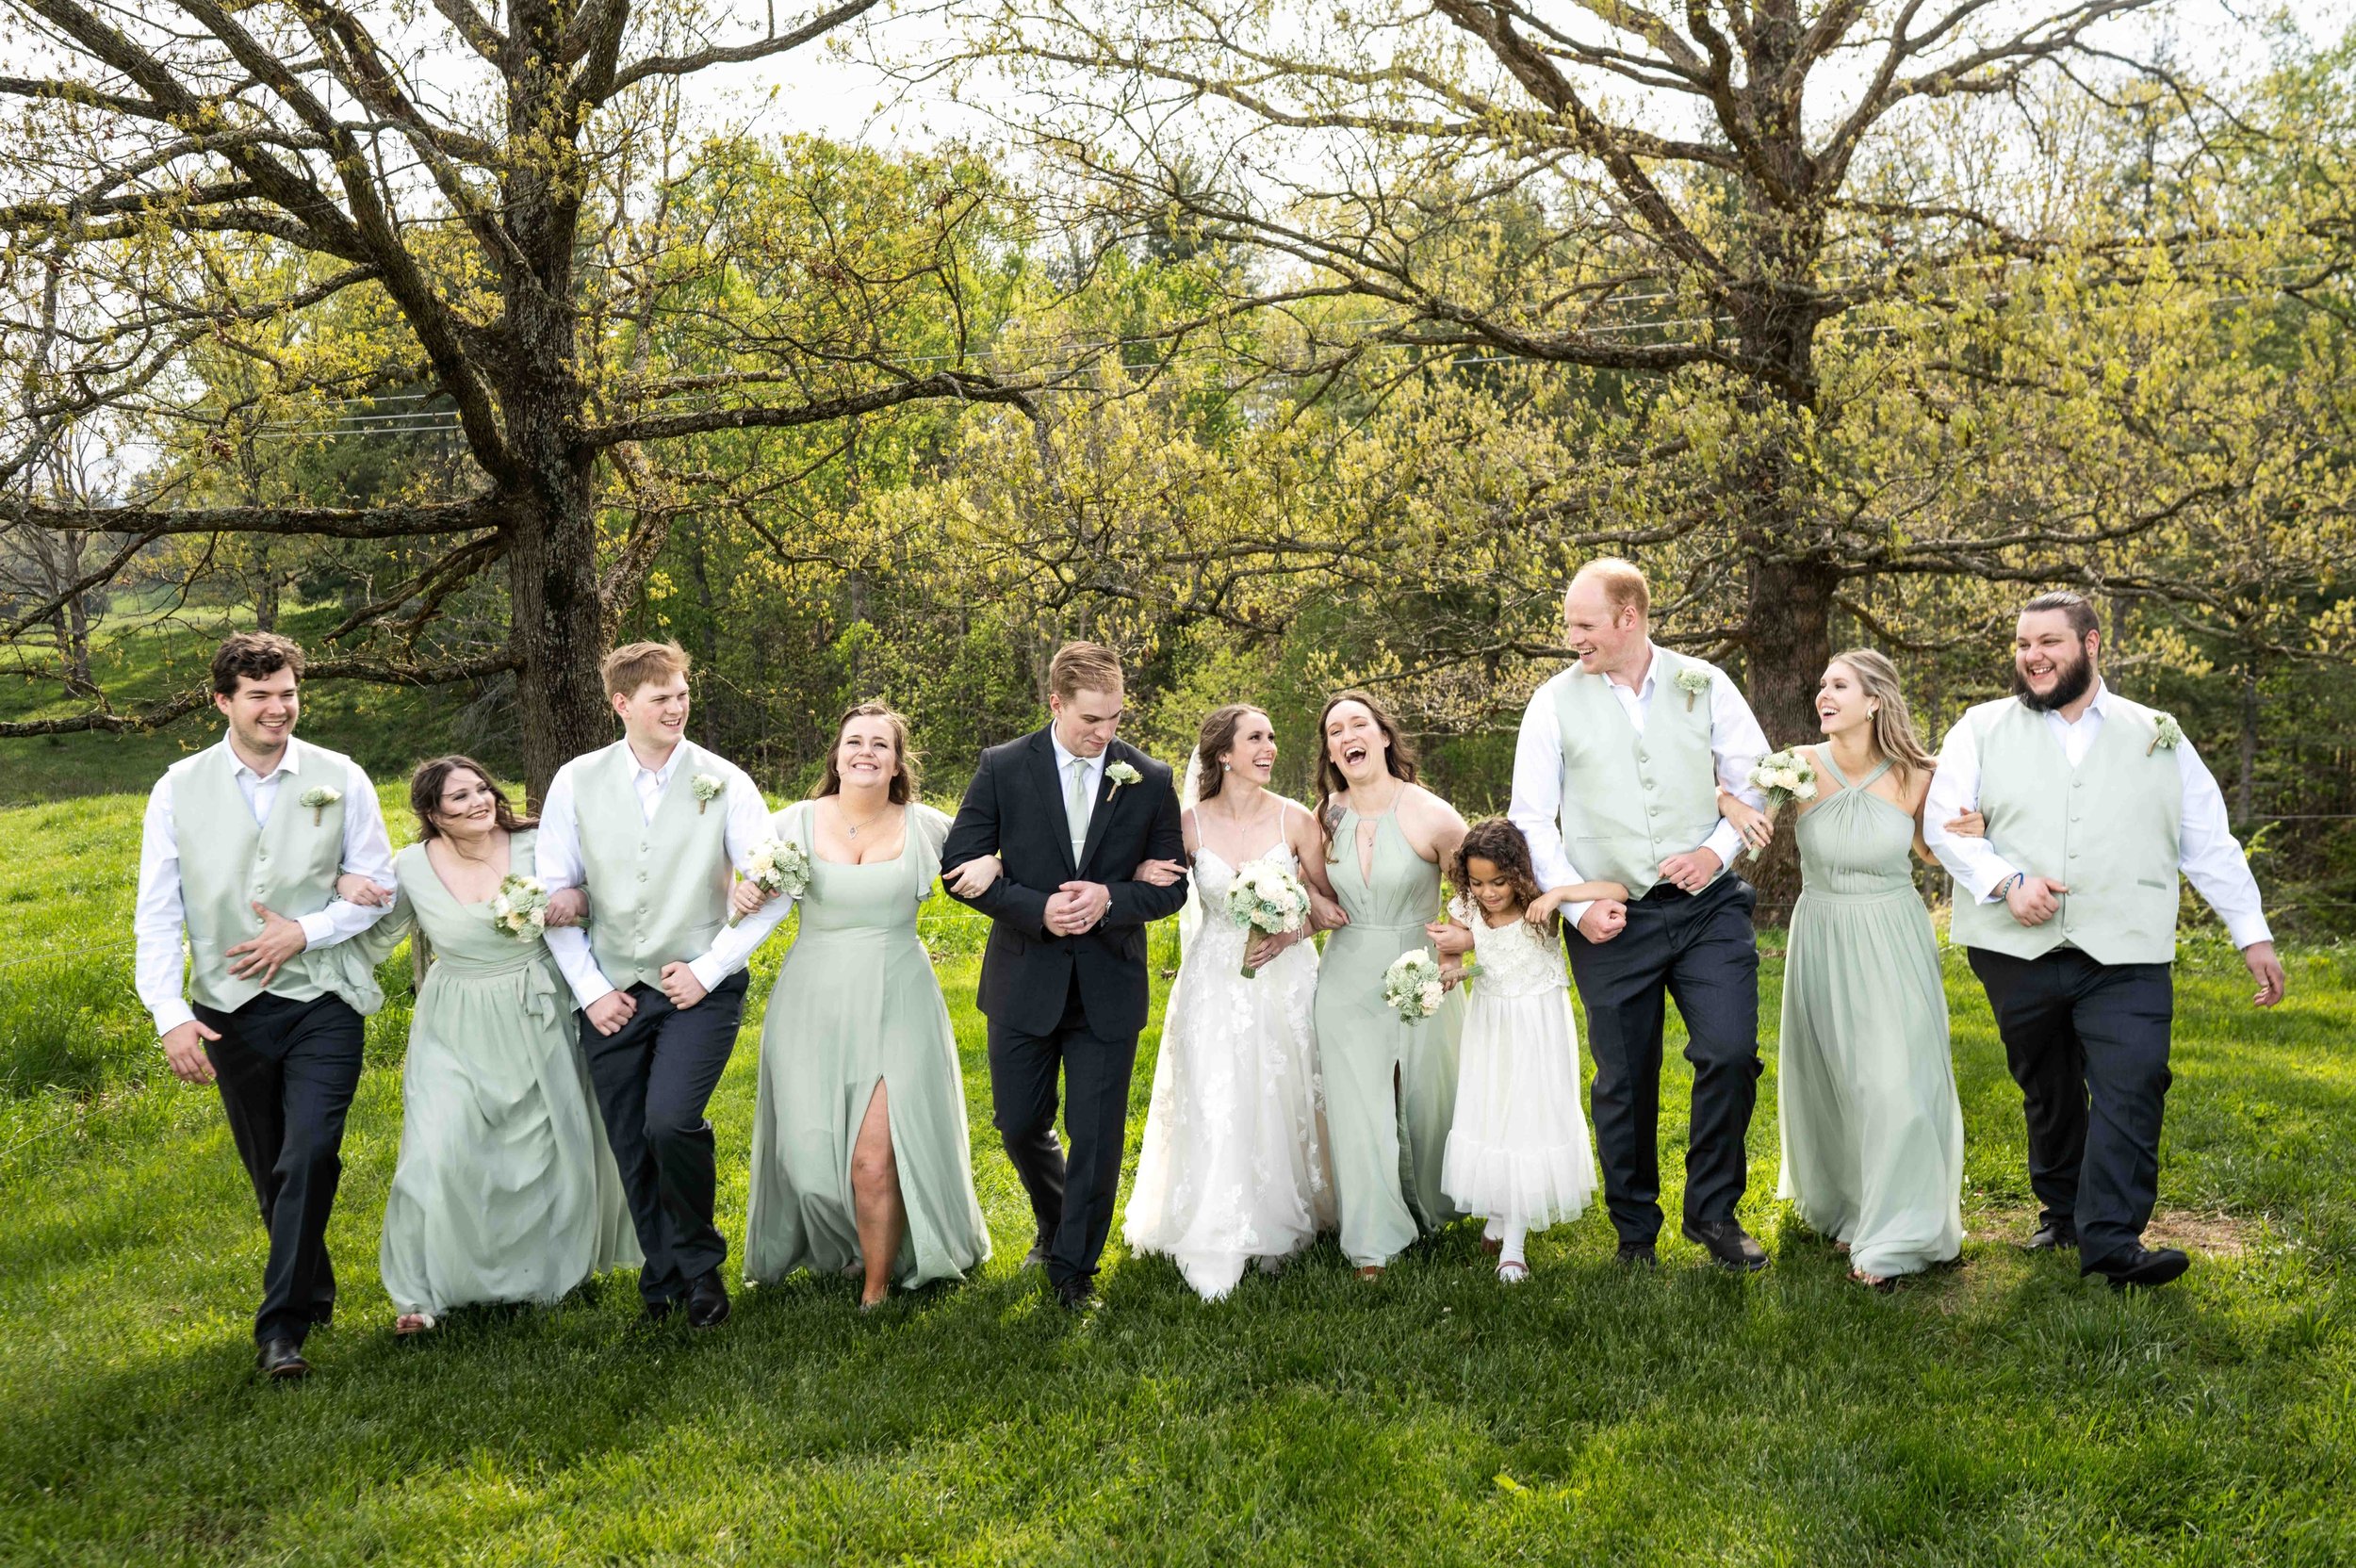 Outdoor April Wedding in Asheville North Carolina at Emerald Ridge Farm & Event Center blog 2 15.jpg